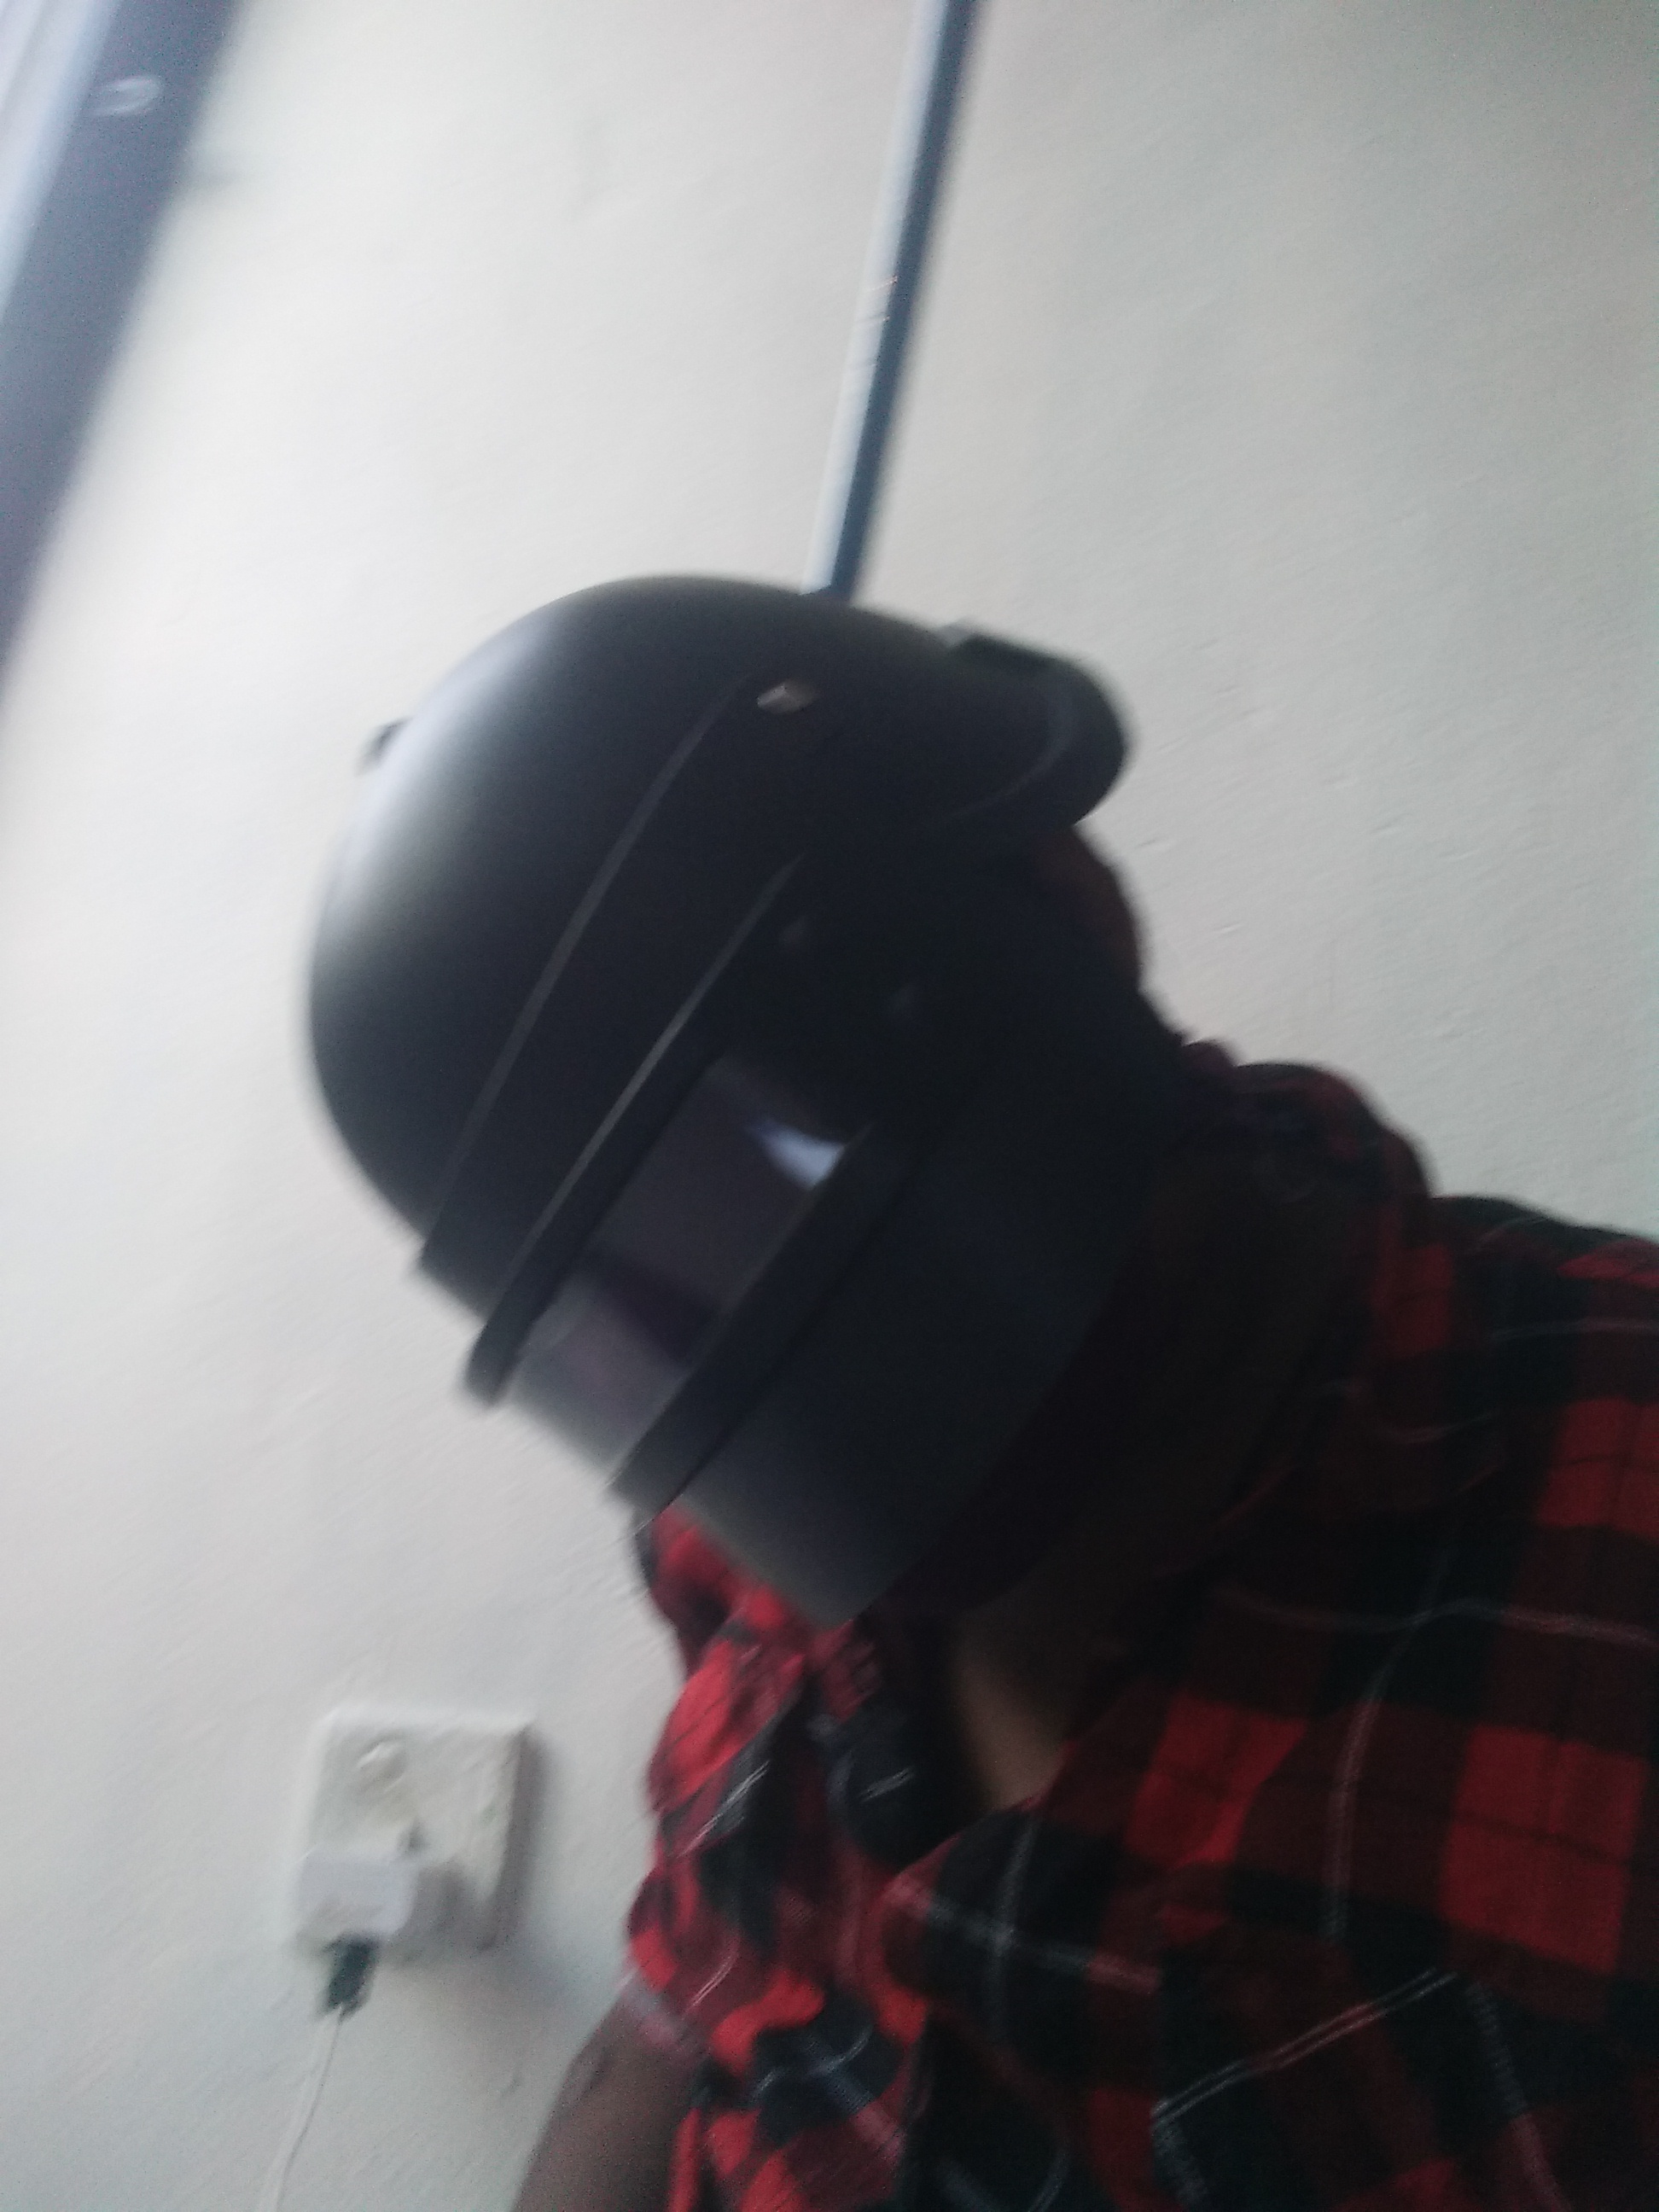 Alextreme Unique Game Cosplay Mask Battlegrounds Level 3 Helmet Cap Props for Pubg Toy, Adult Unisex, Size: 25.5